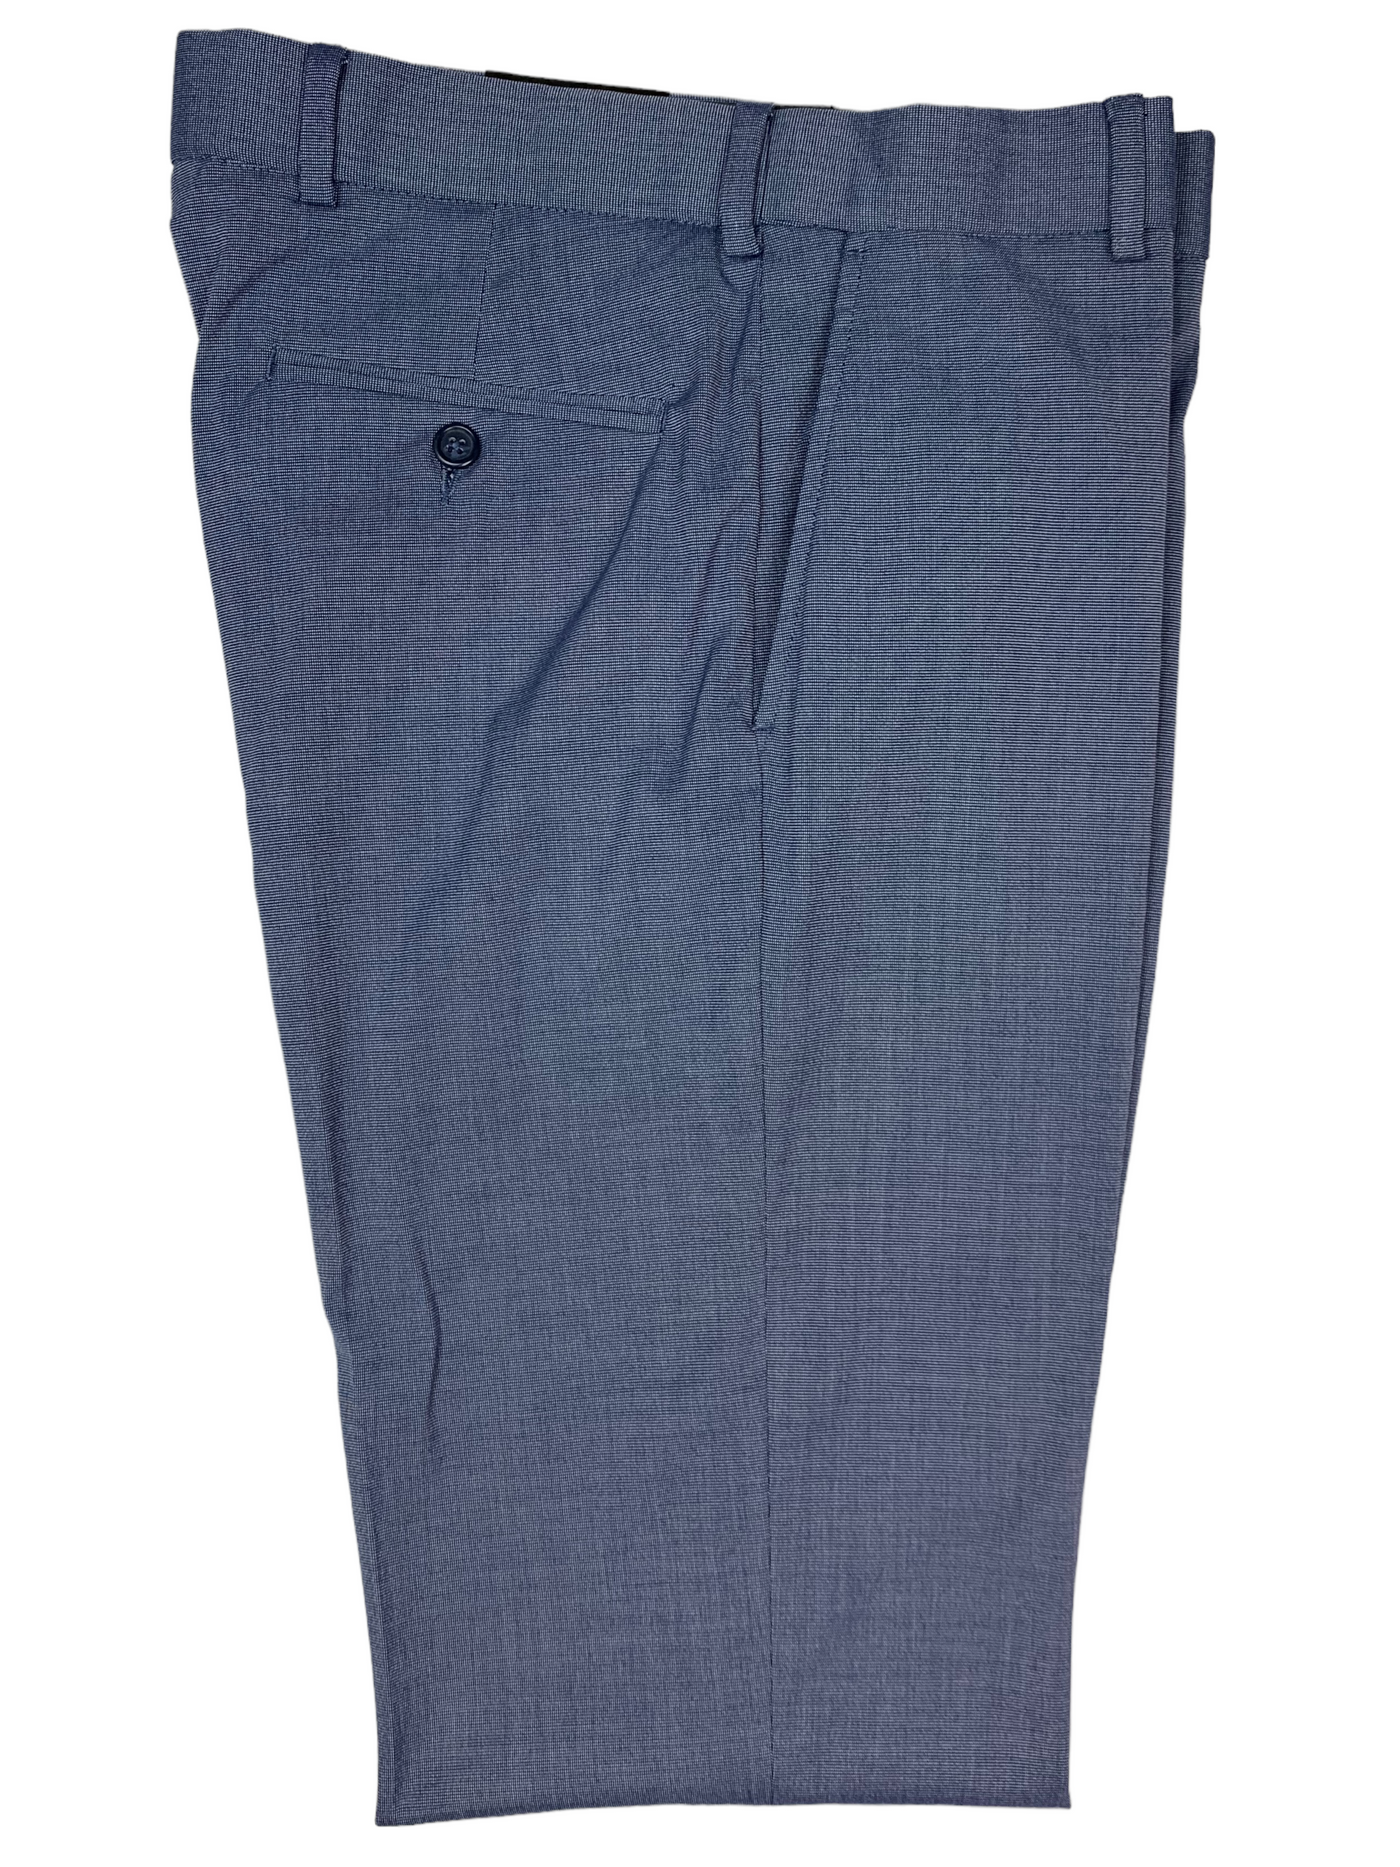 Pantalon habillé bleu micro pois Barris